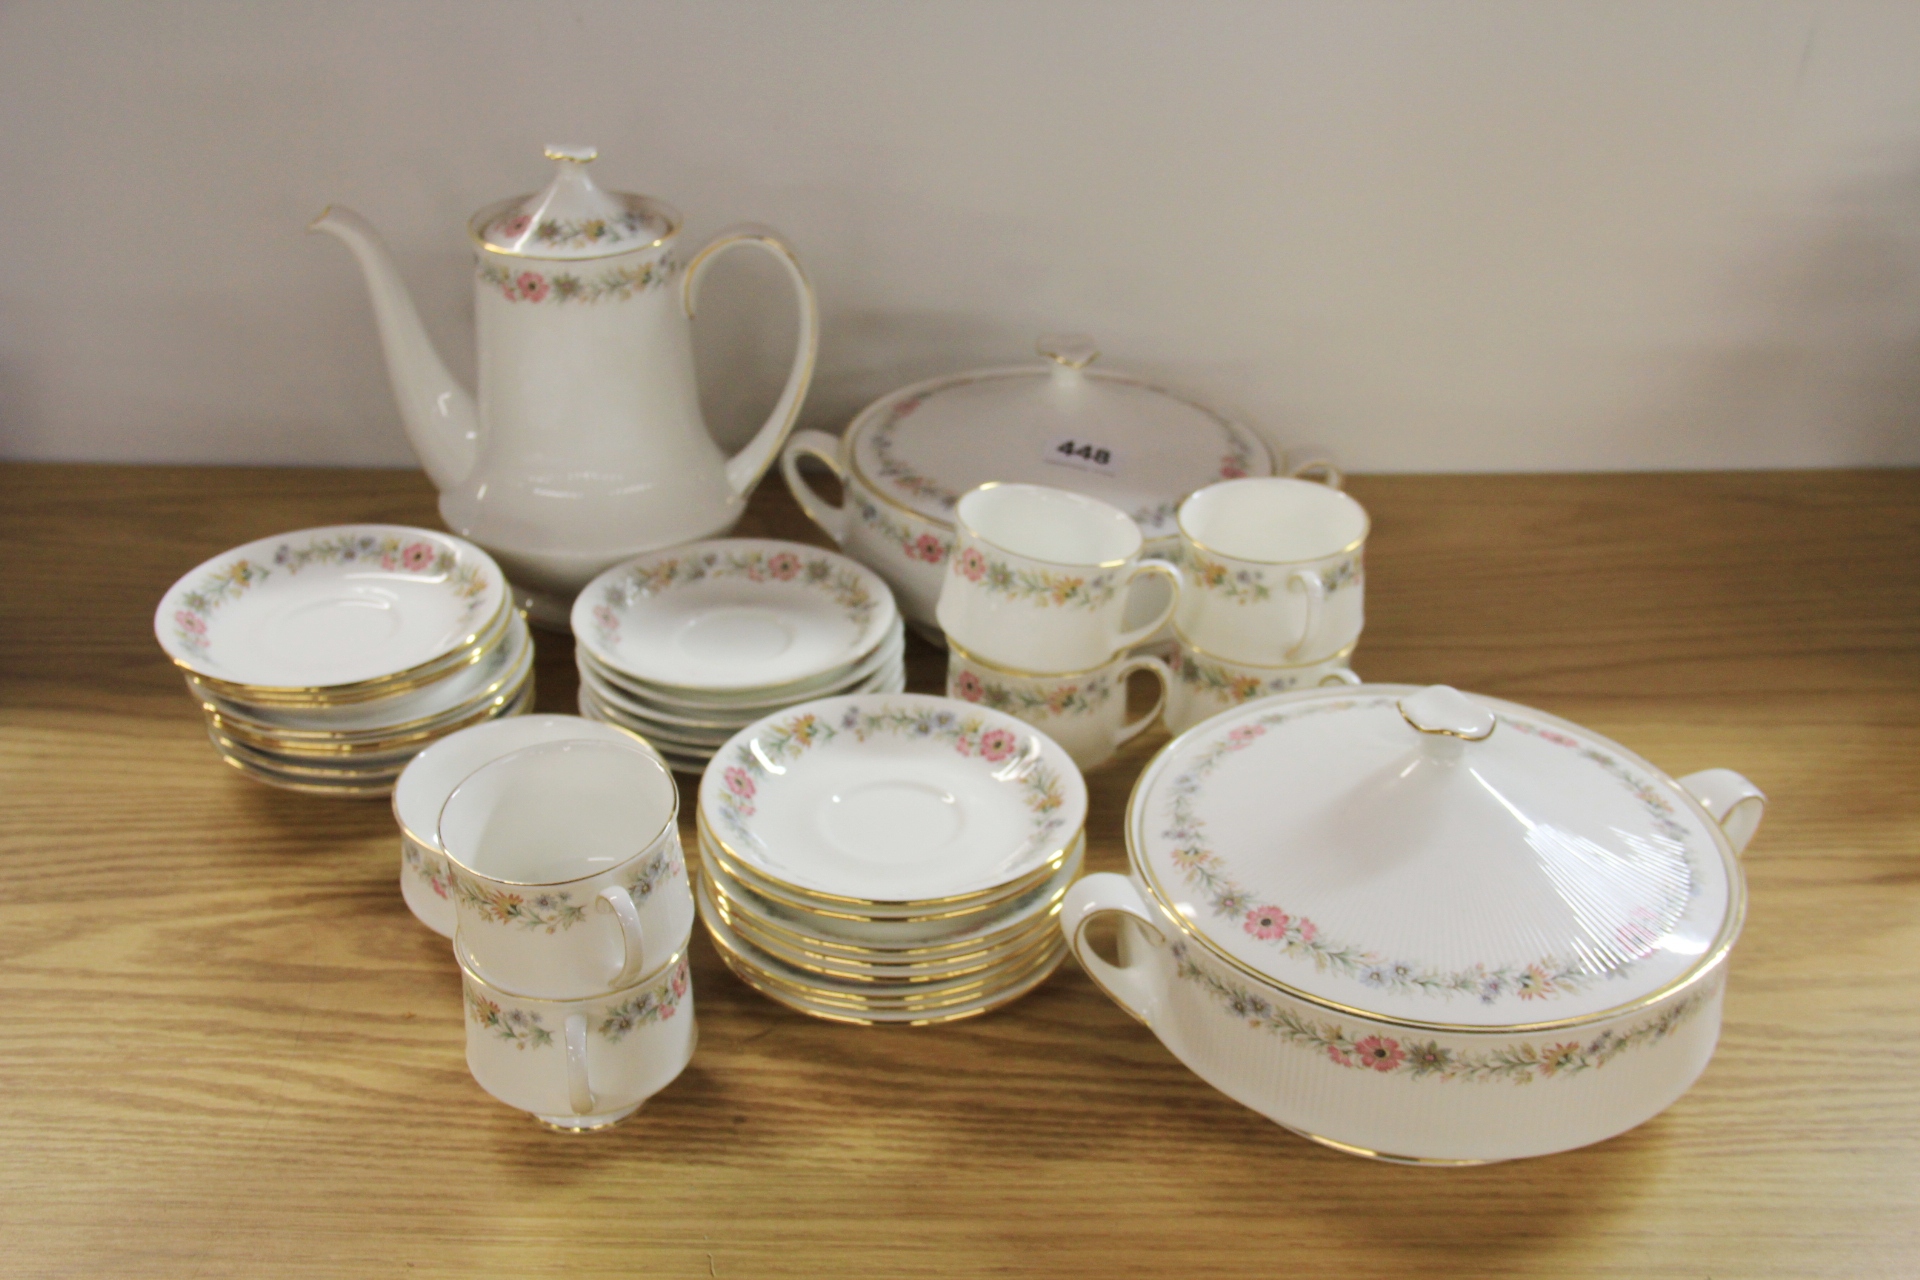 A quantity of Royal Albert and Paragon, Belinda pattern coffee china.